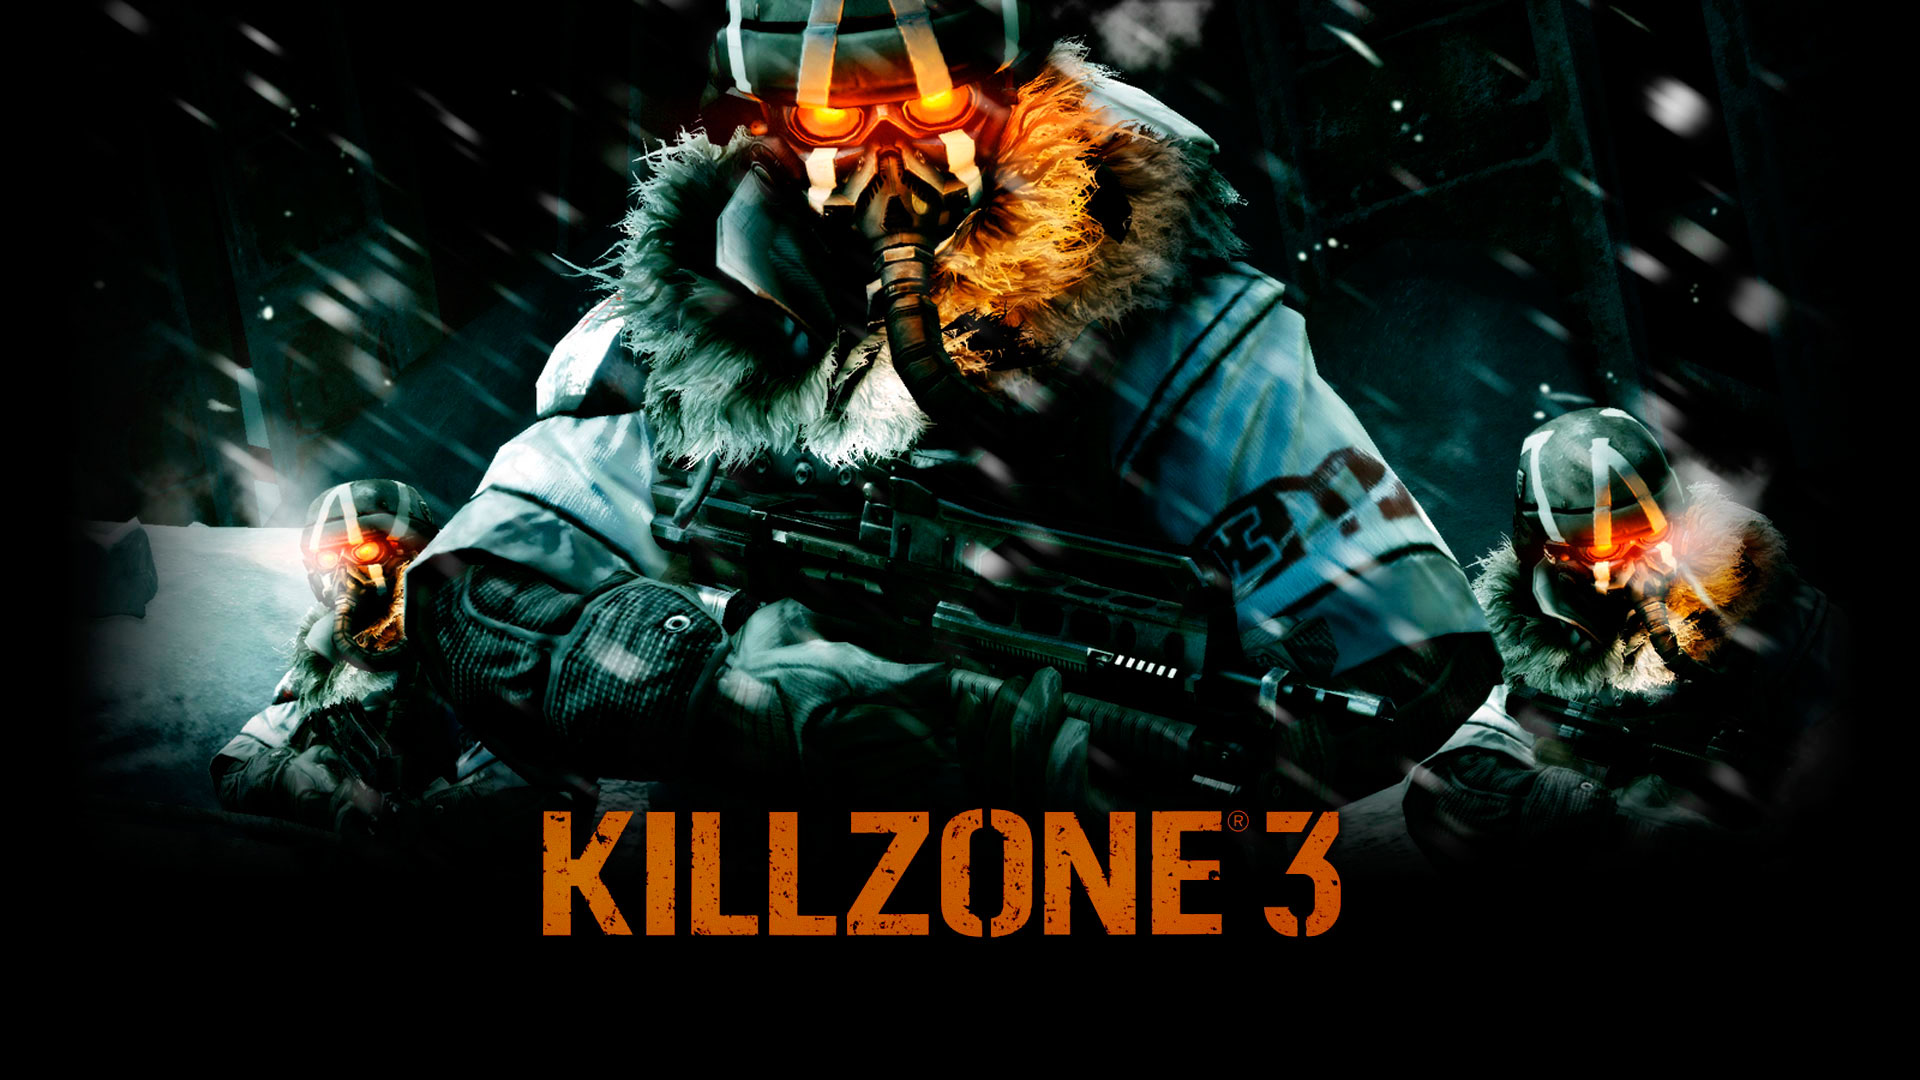 Killzone 3 Ps3, animated, 1920x1080 HD Wallpaper and FREE Stock Photo